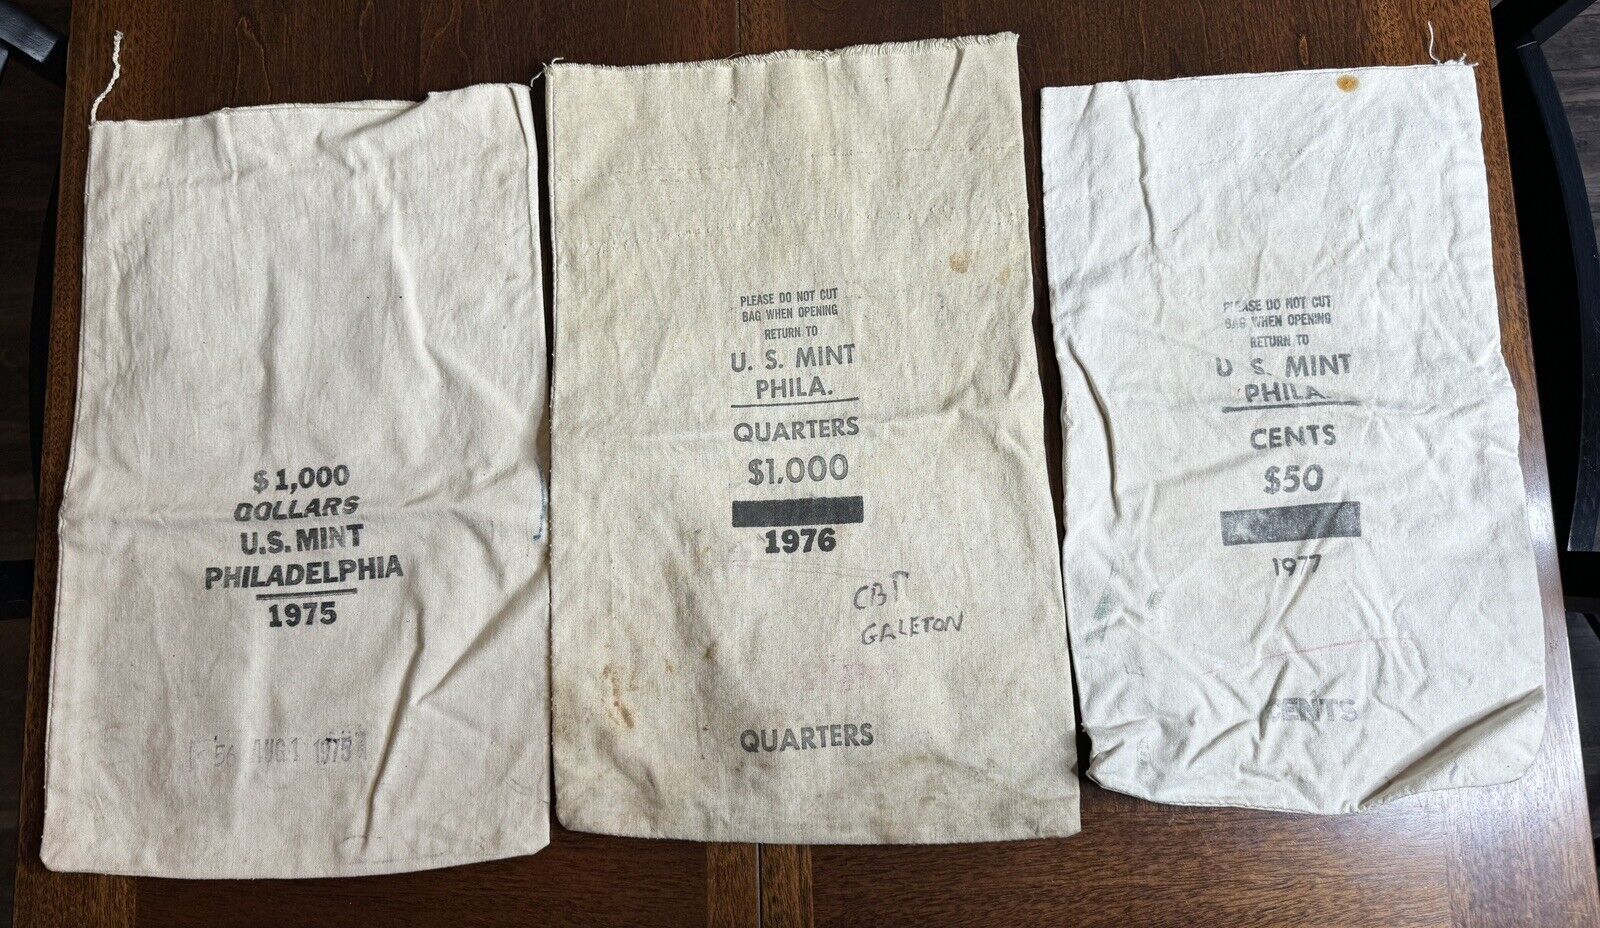 Lot of 3 U.S. MINT PHILADELPHIA EMPTY MONEY CANVAS BAGS 1975, 76, & 77 Dollars